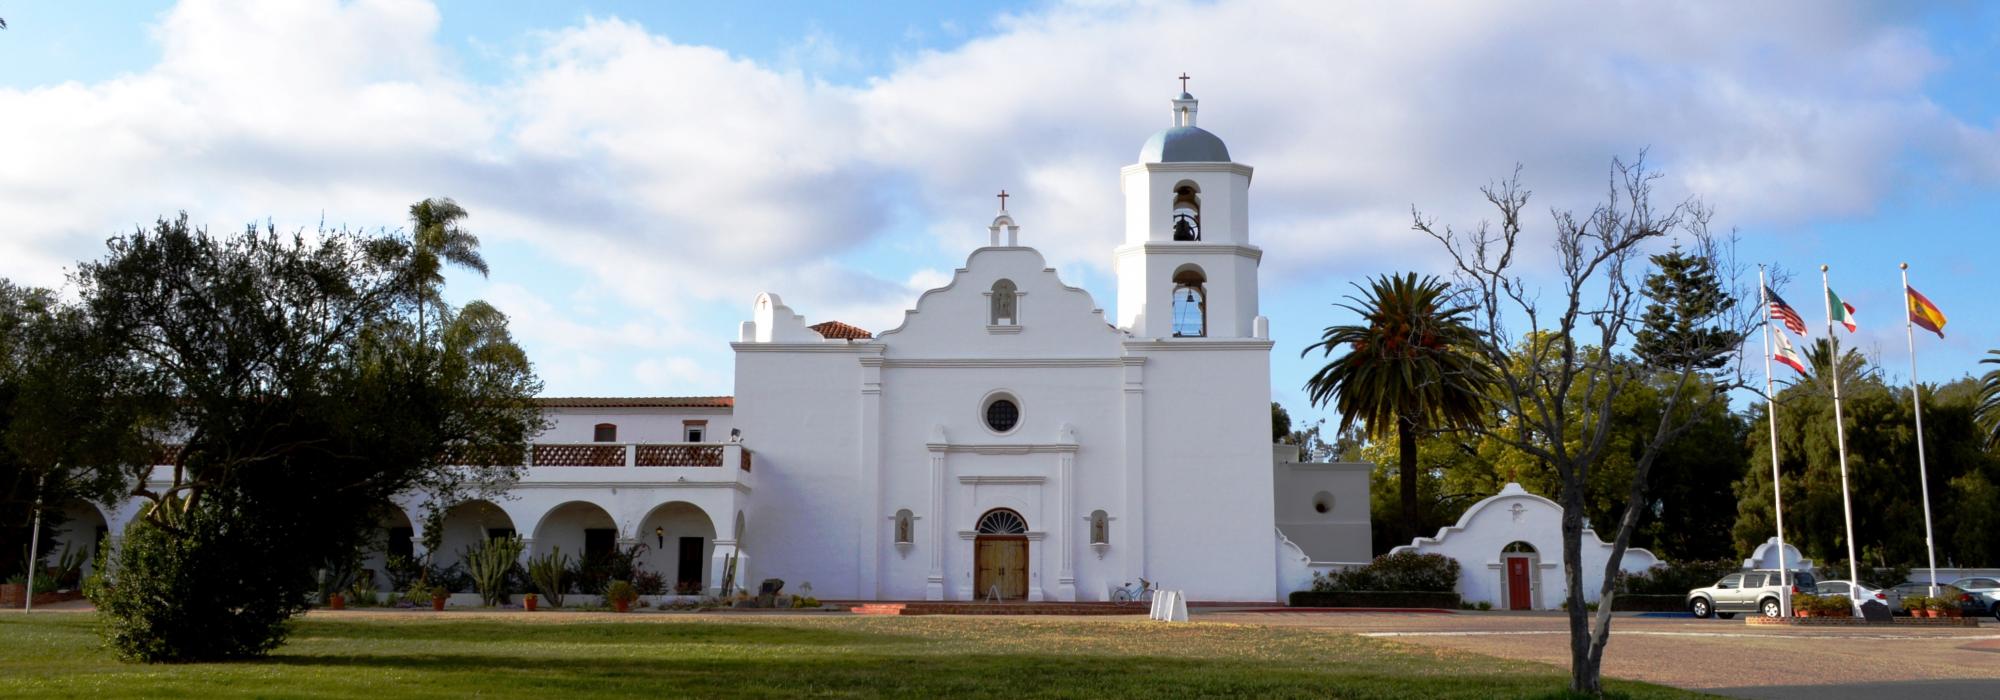 Mission San Luis Rey de Francía, Oceanside, CA